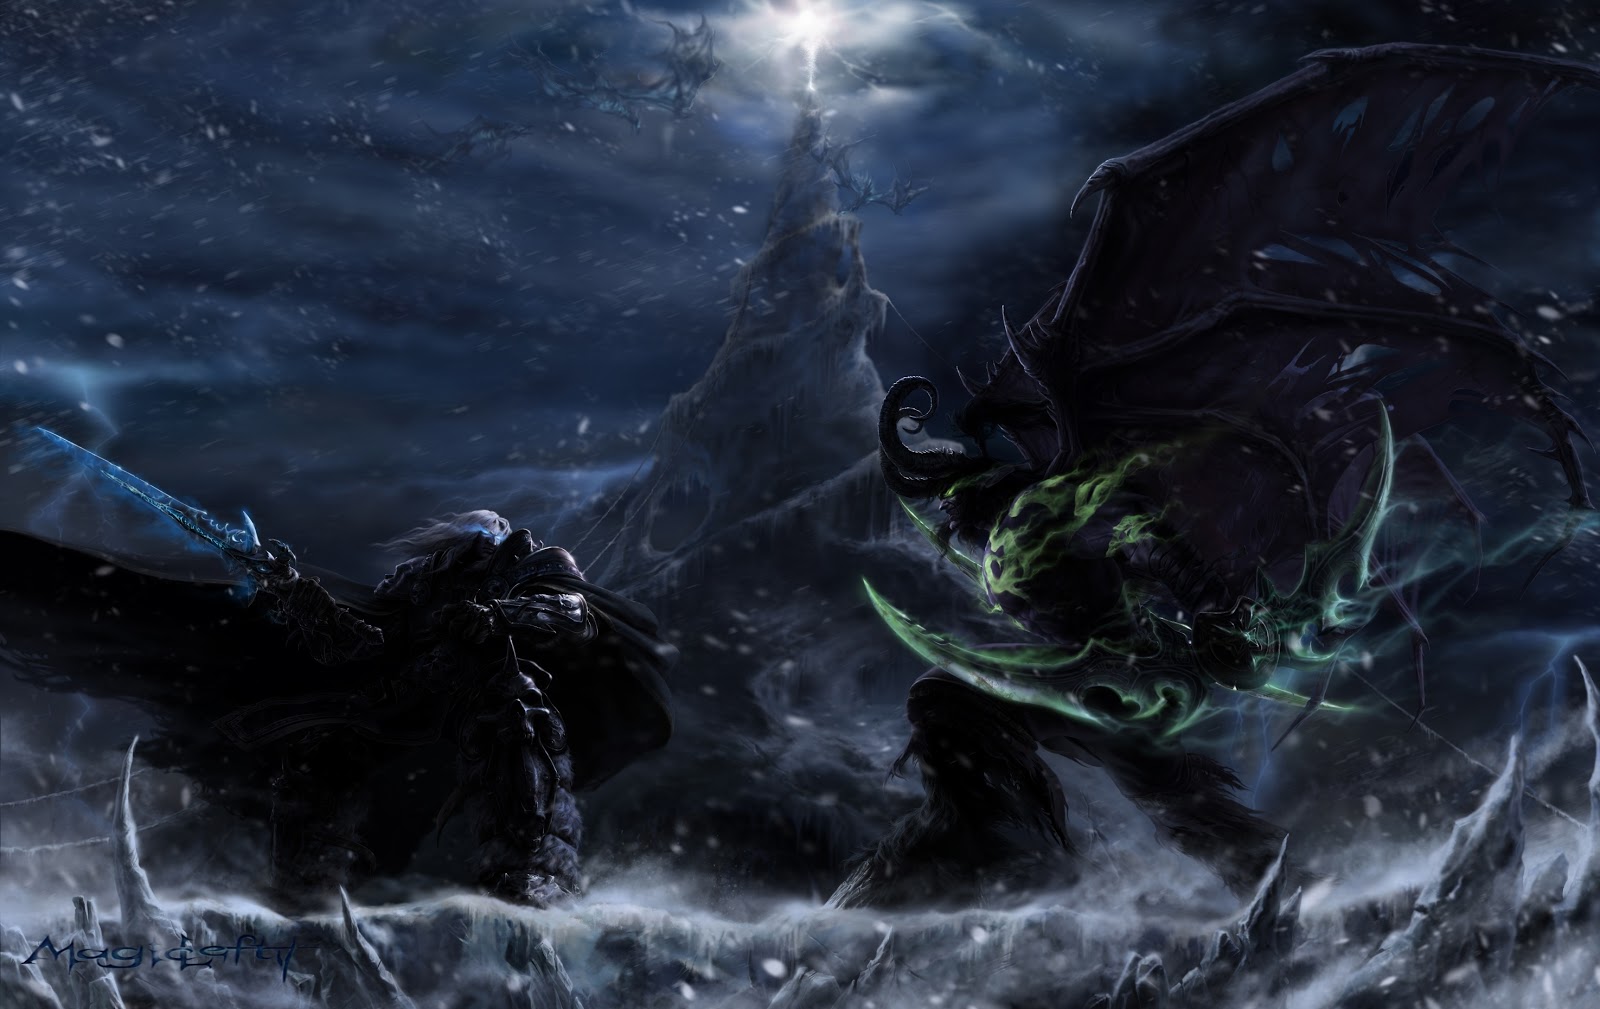 Vs Illidan Stormrage Wallpaper HD World Of Warcraft Arthas